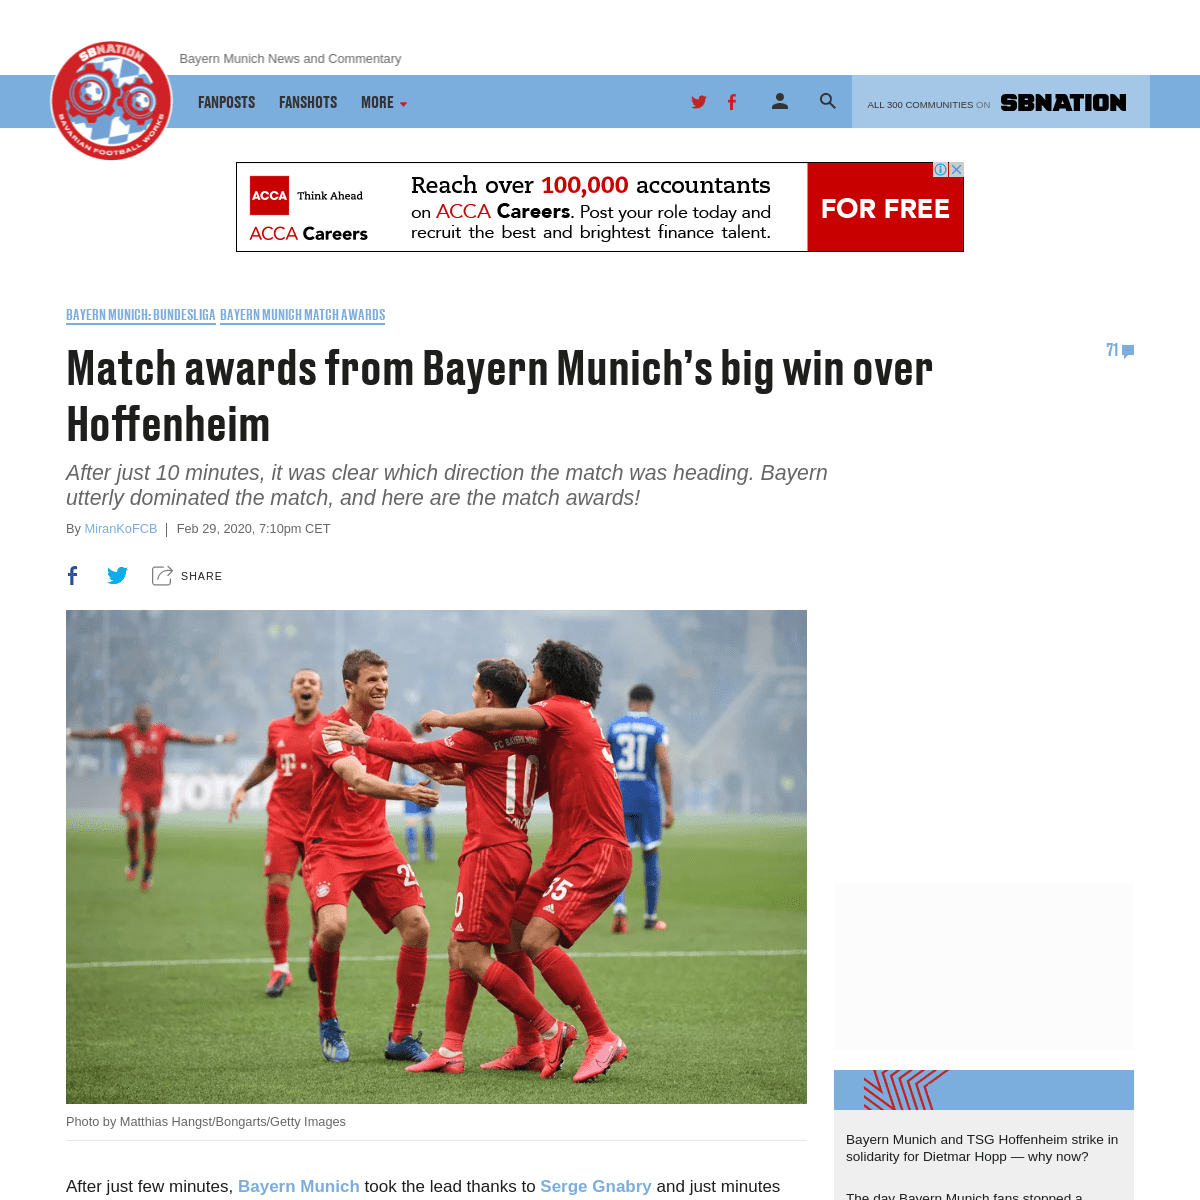 A complete backup of www.bavarianfootballworks.com/2020/2/29/21159122/bayern-munich-match-awards-prize-analysis-hoffenheim-bunde